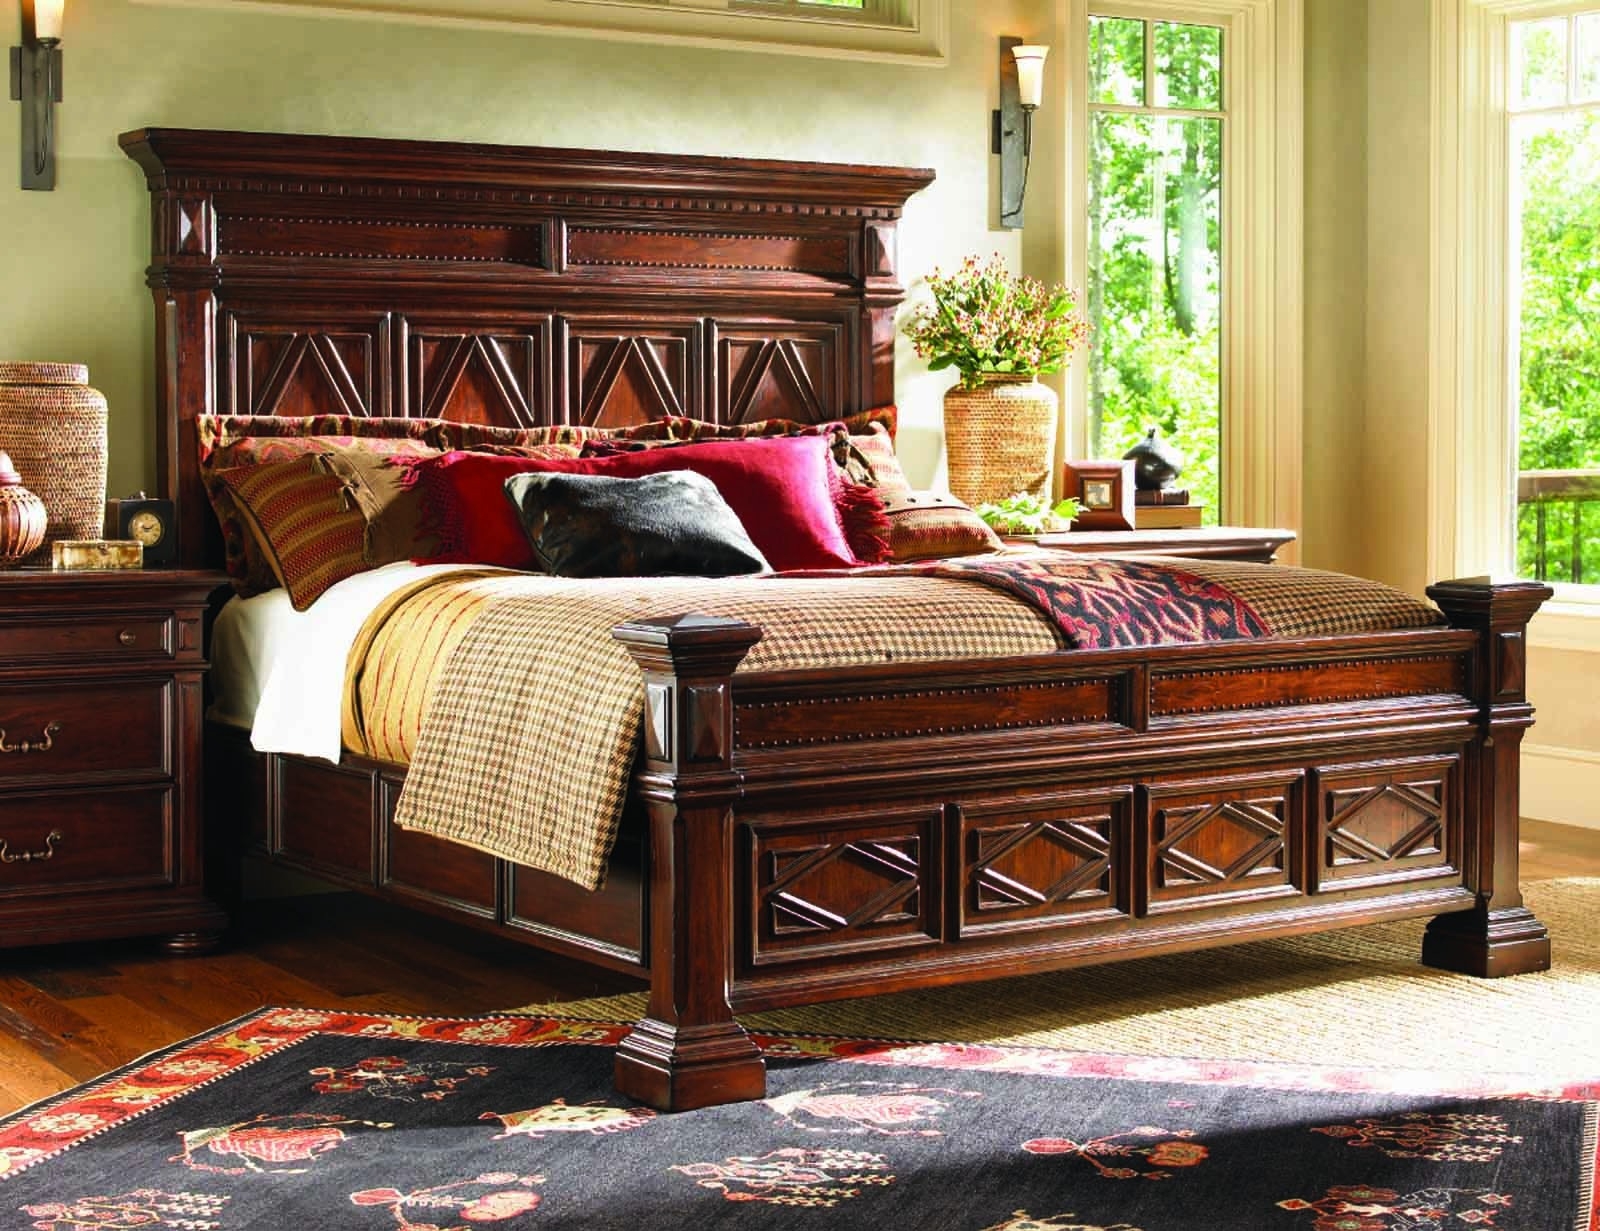 769 rustic cedar canopy bedroom set bed size twin 877